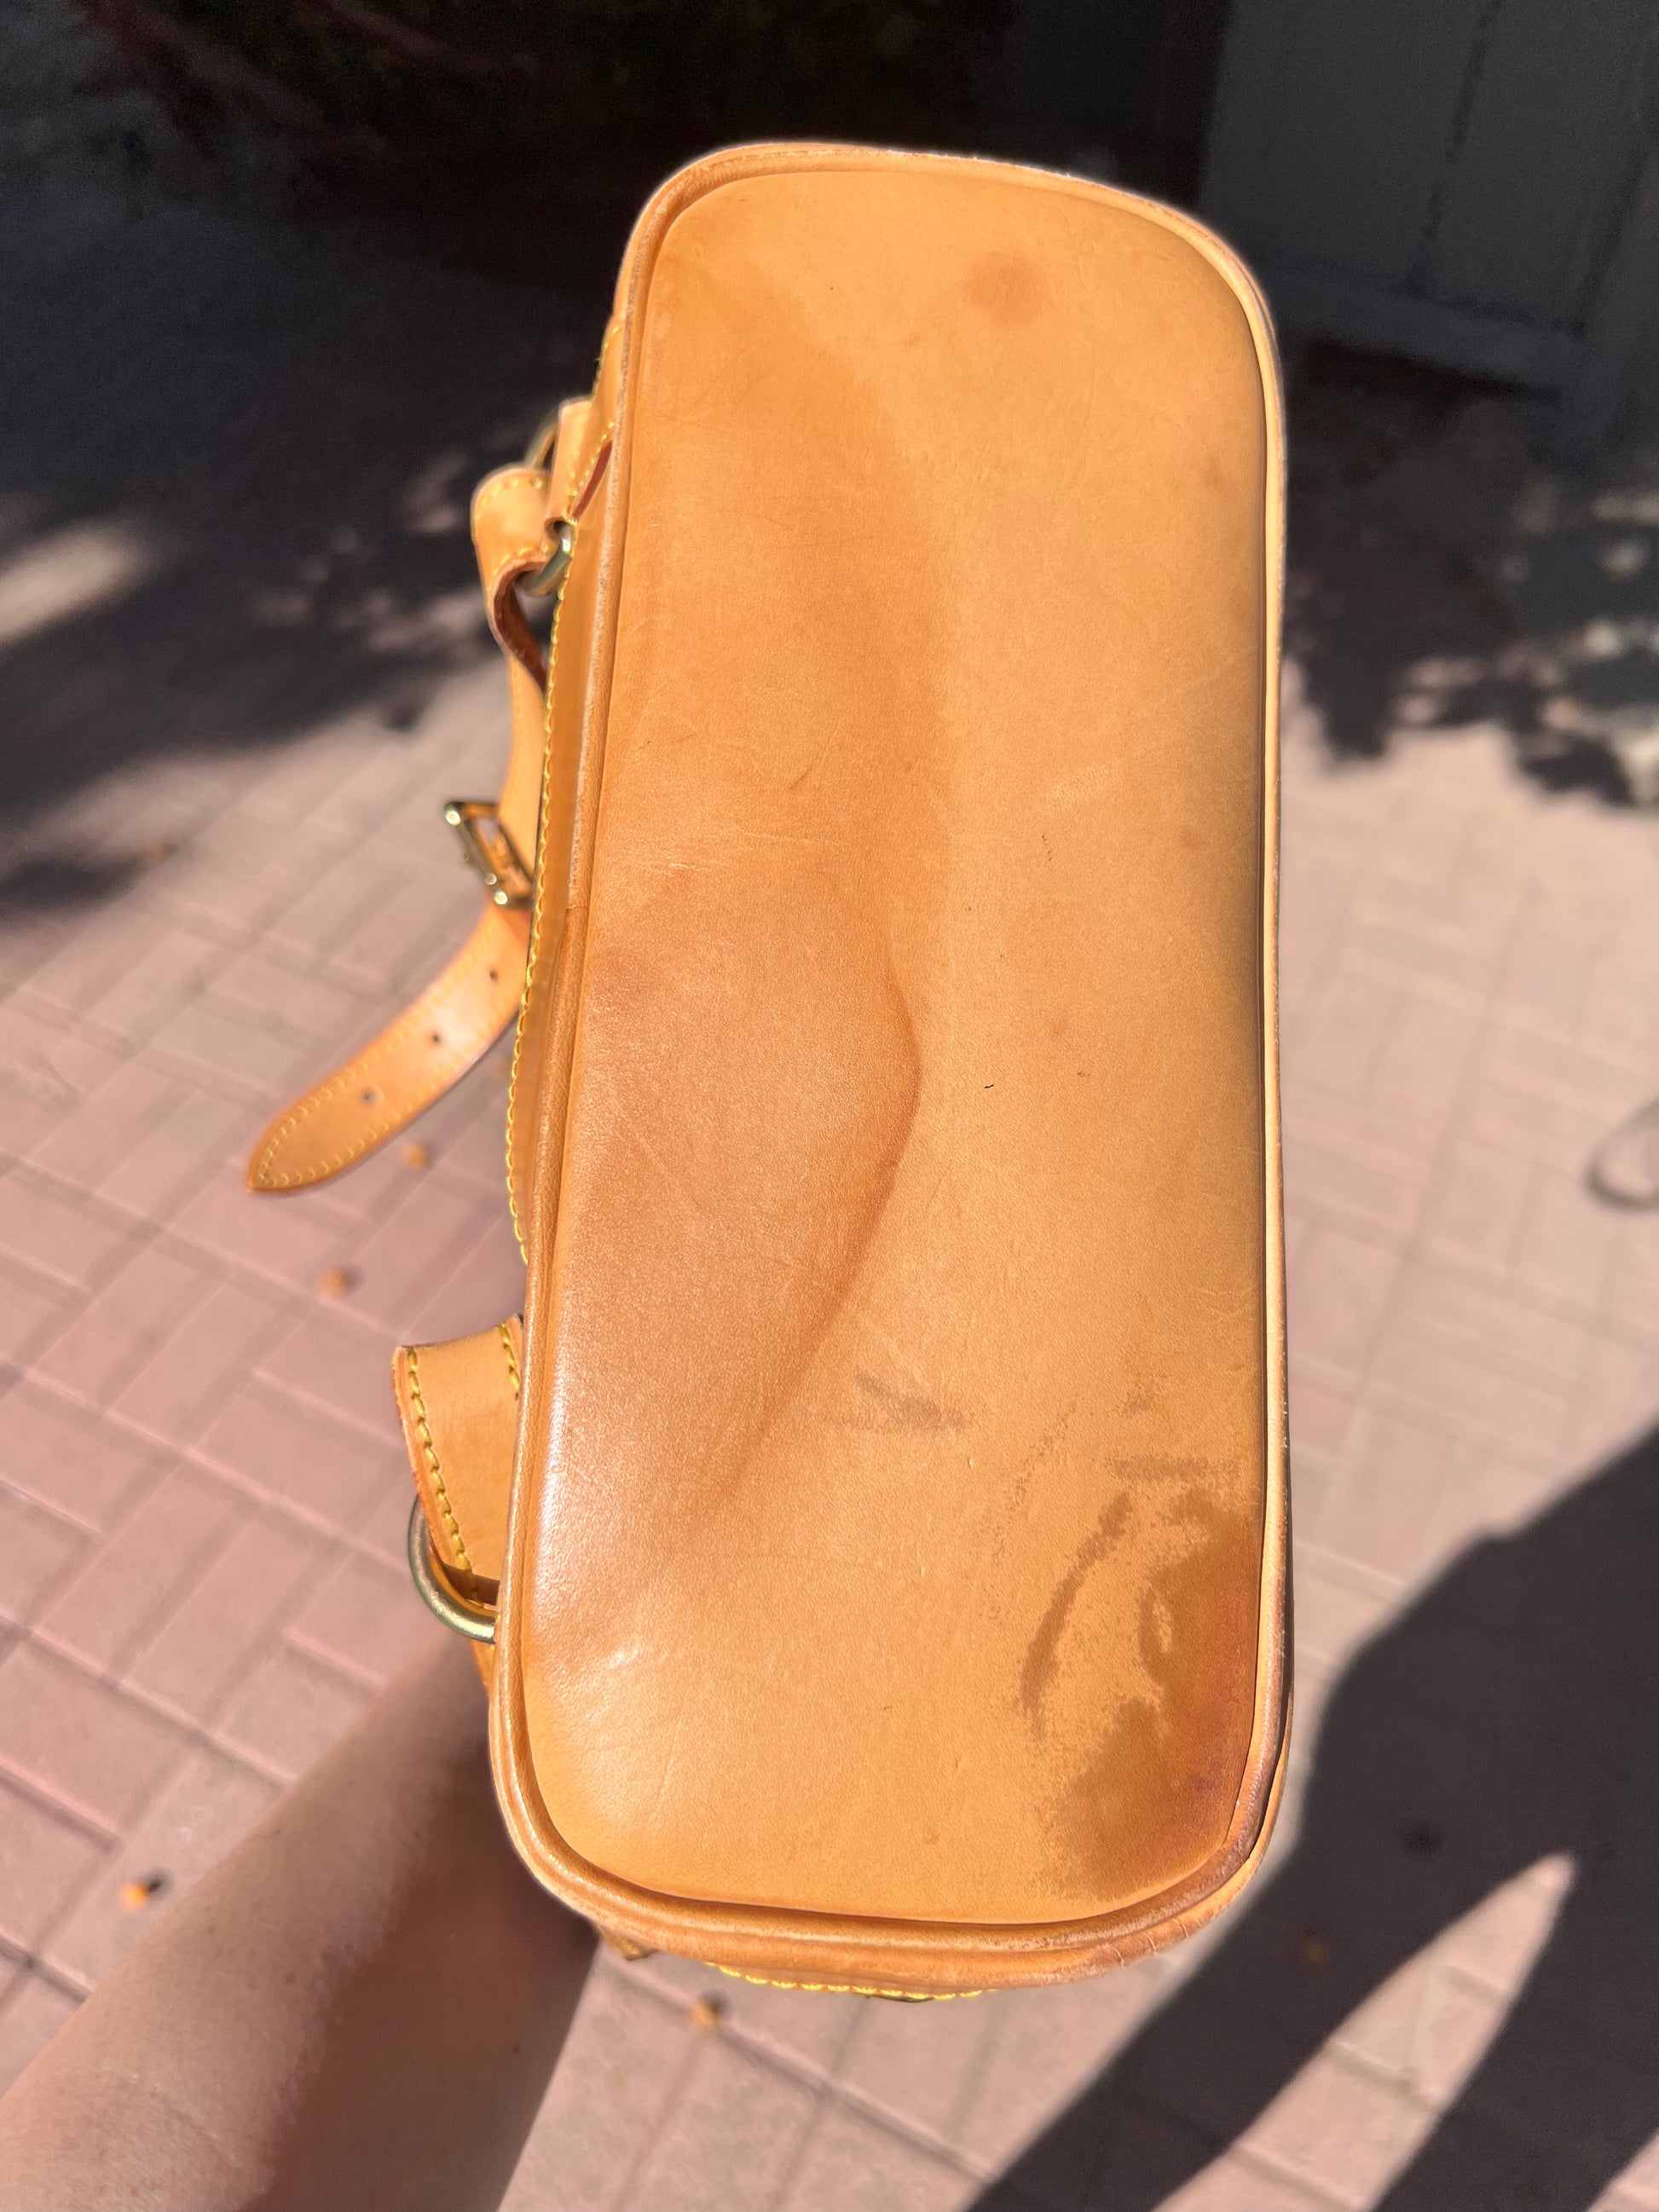 Louis Vuitton Damier Ebene Canvas Soho Backpack Bag. Excellent